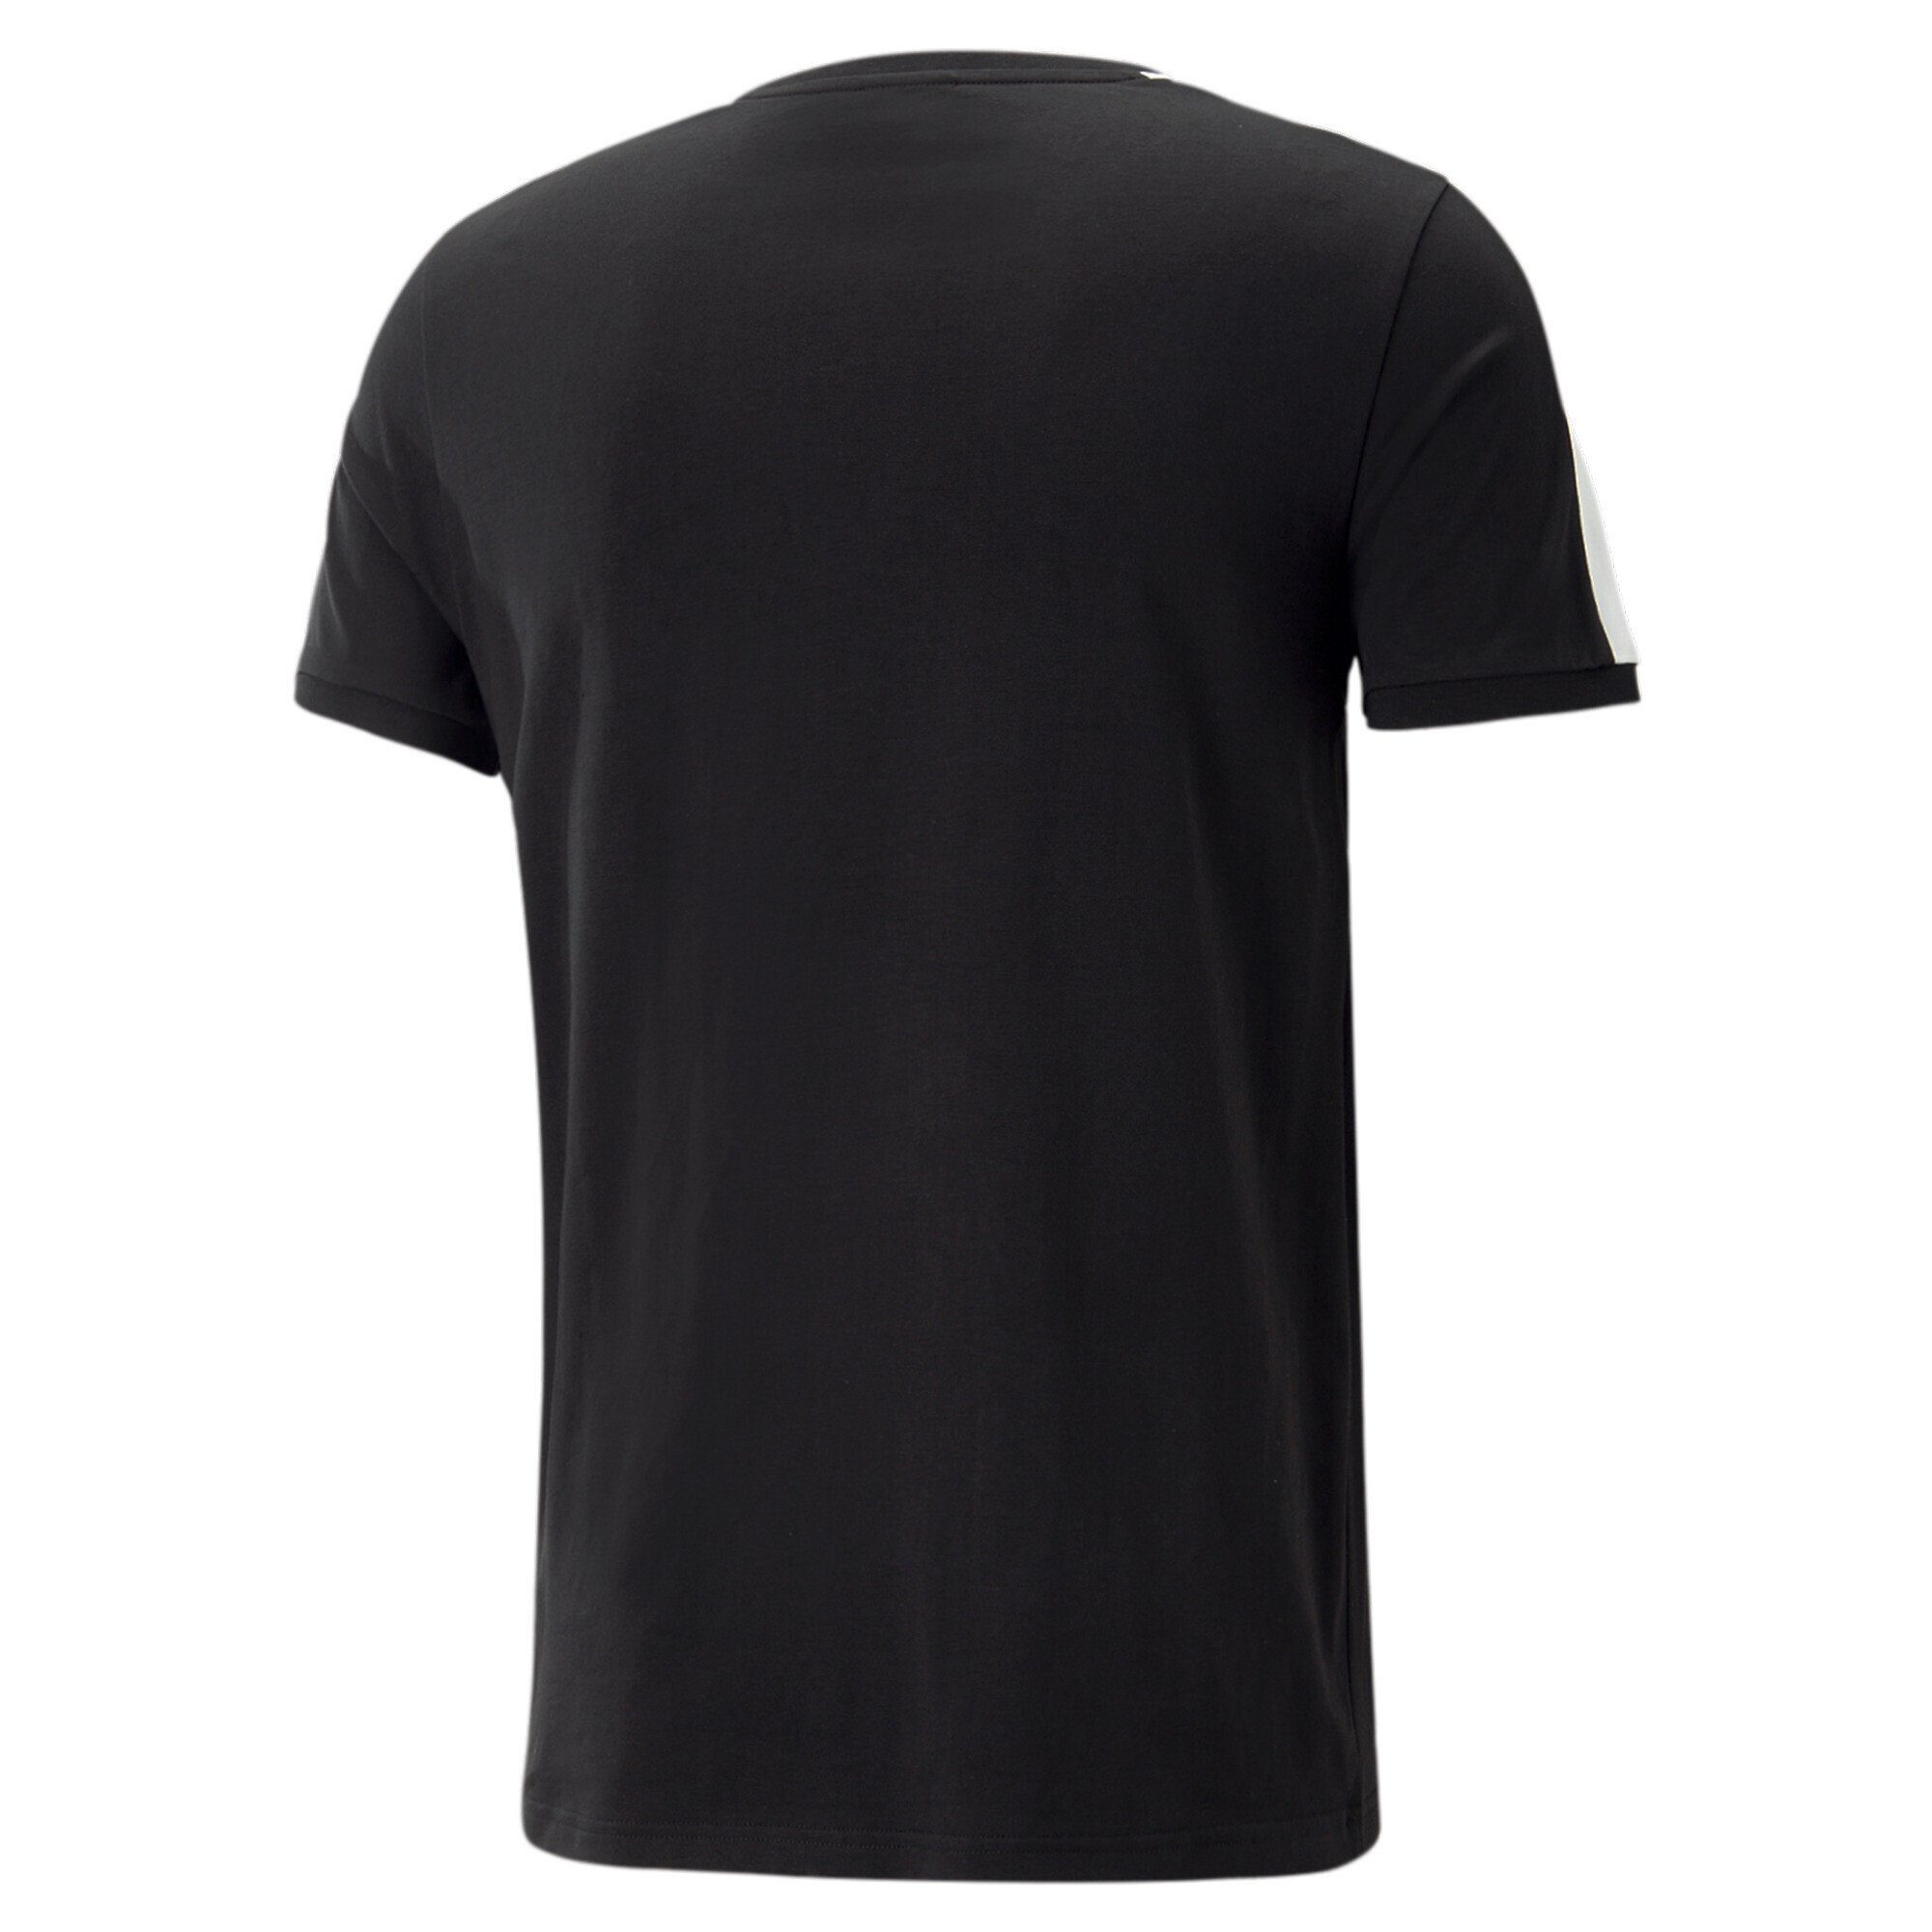 PUMA T-Shirt ICONIC T7 T-Shirt Black Herren